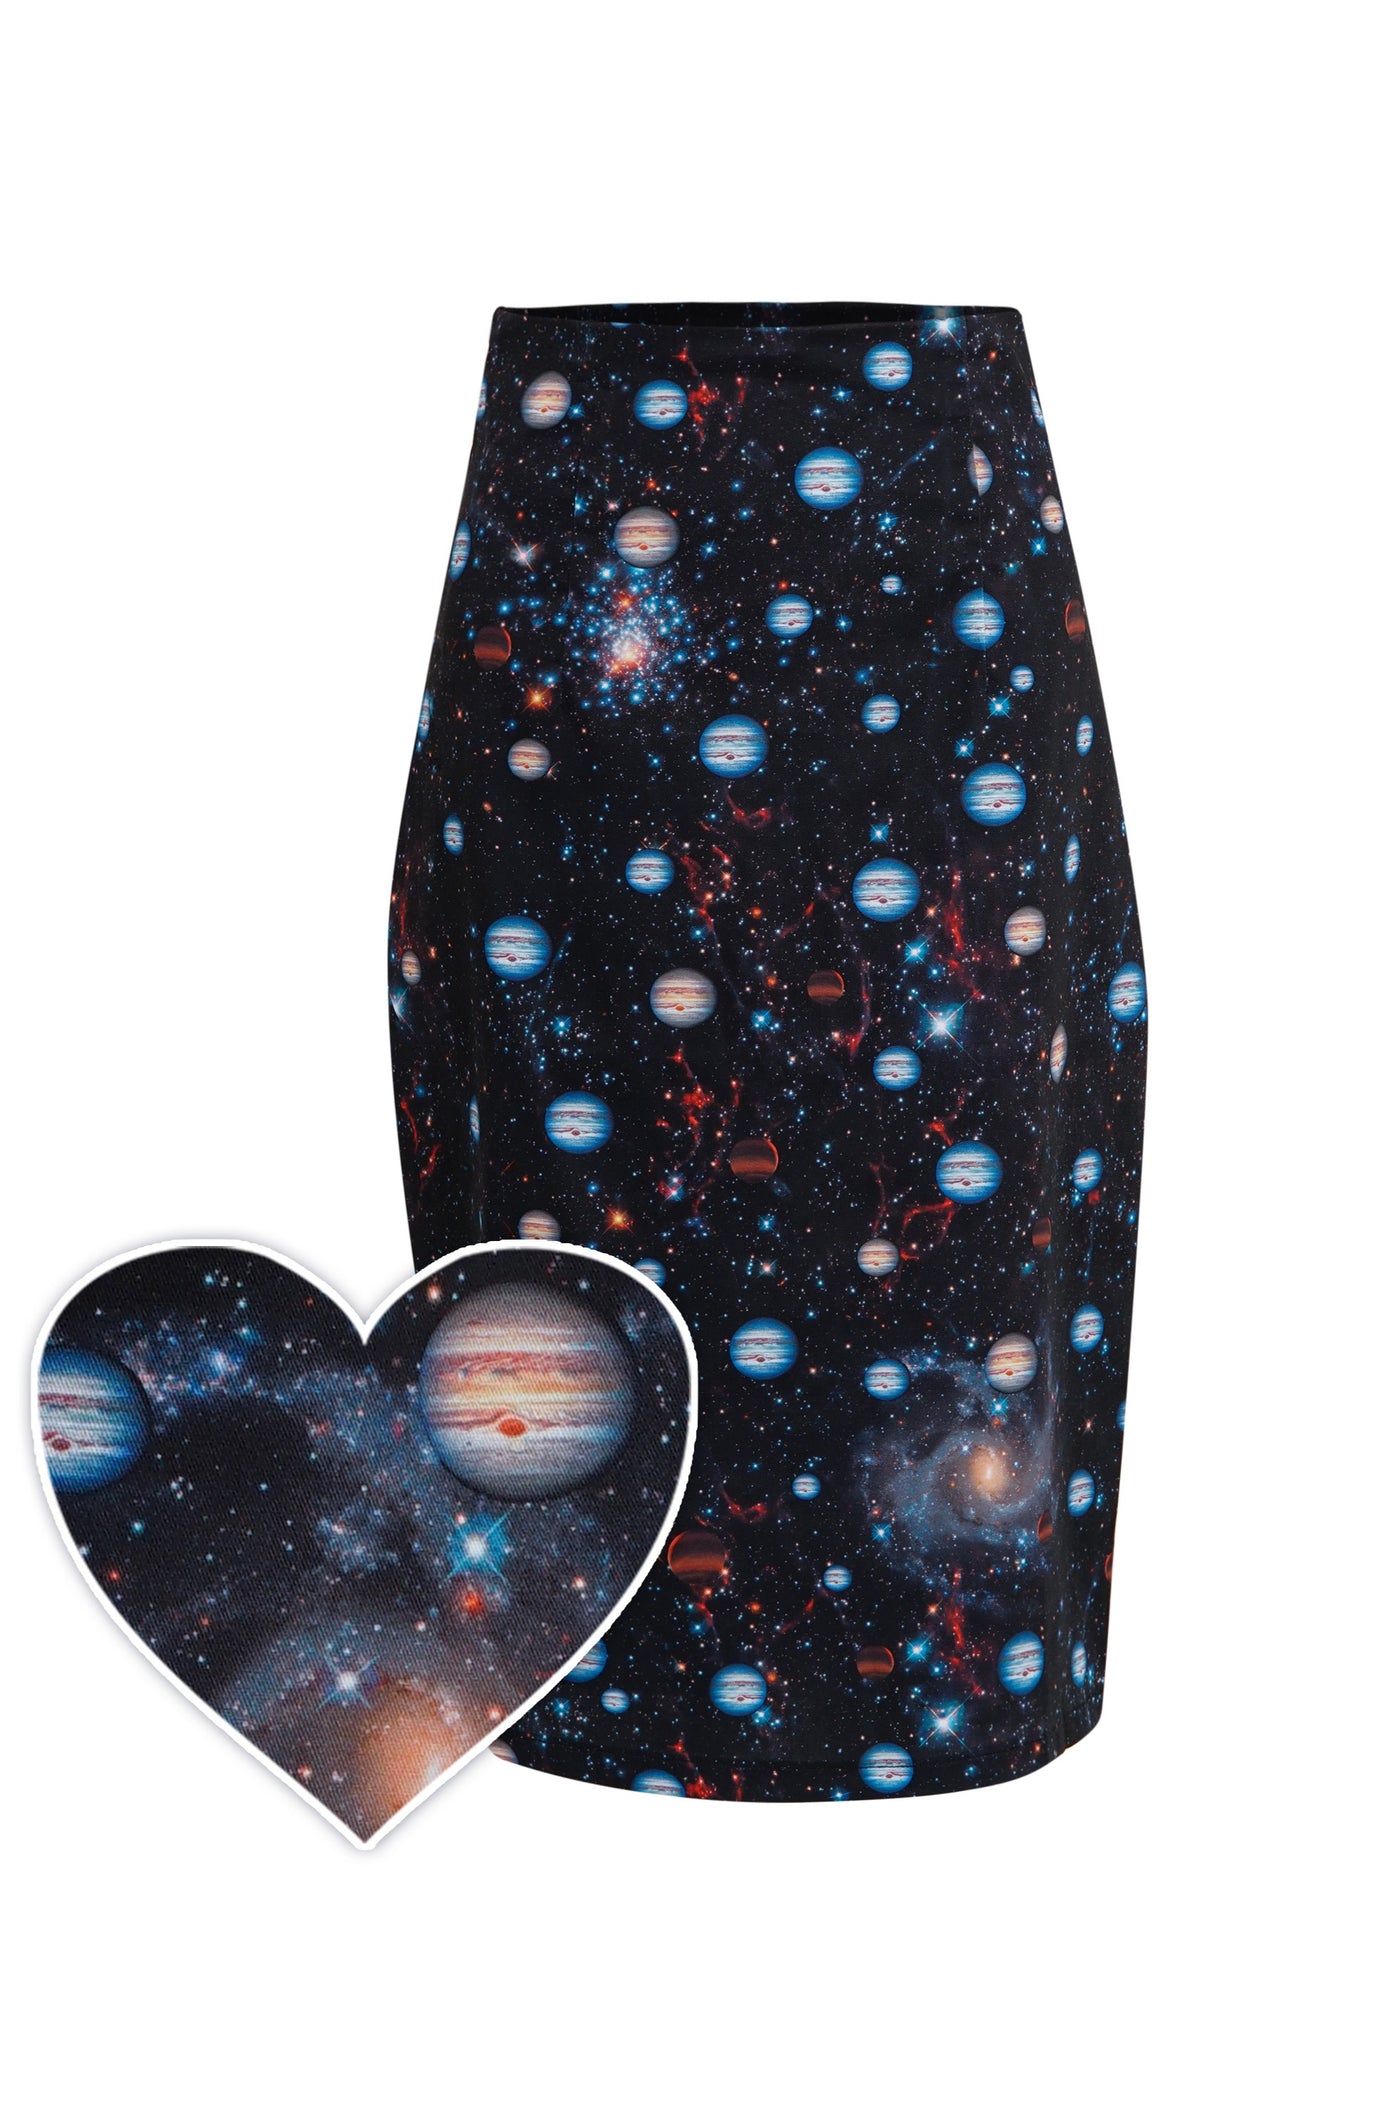 Falda Chic Pencil Skirt in Space Print